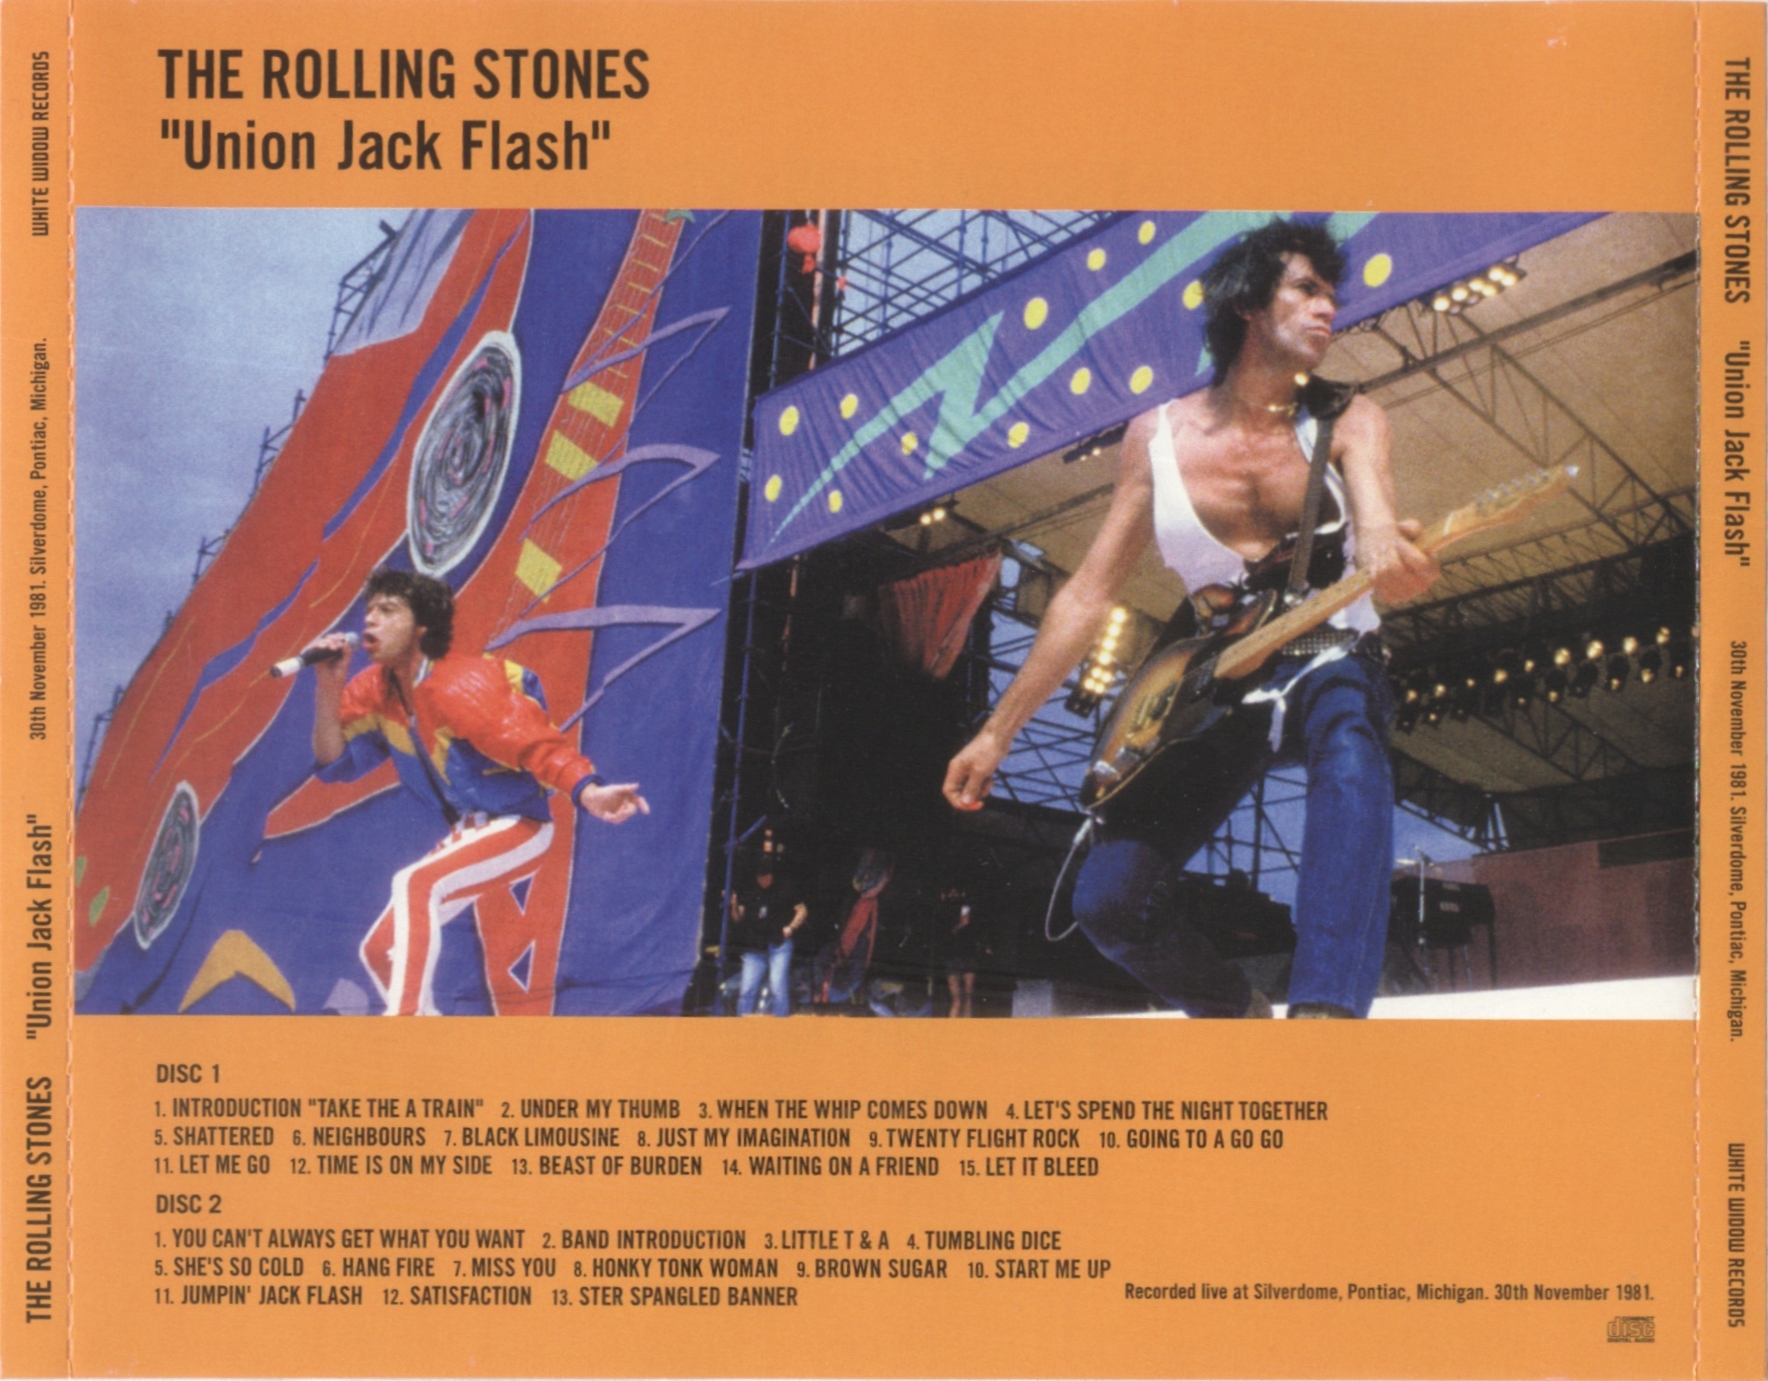 RollingStones1981-11-30SilverdomePontiacMI (2).jpg